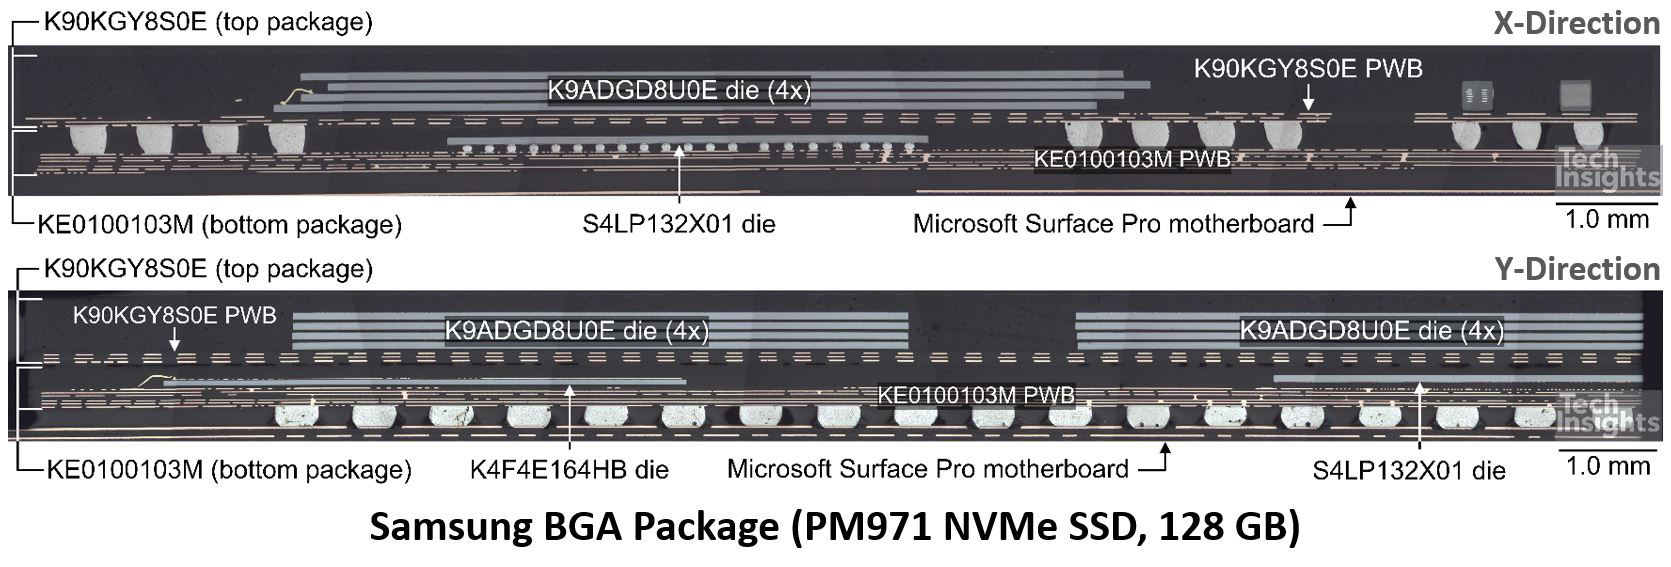 Samsung BGA Package (PM971 NVMe SSD, 128 GB)